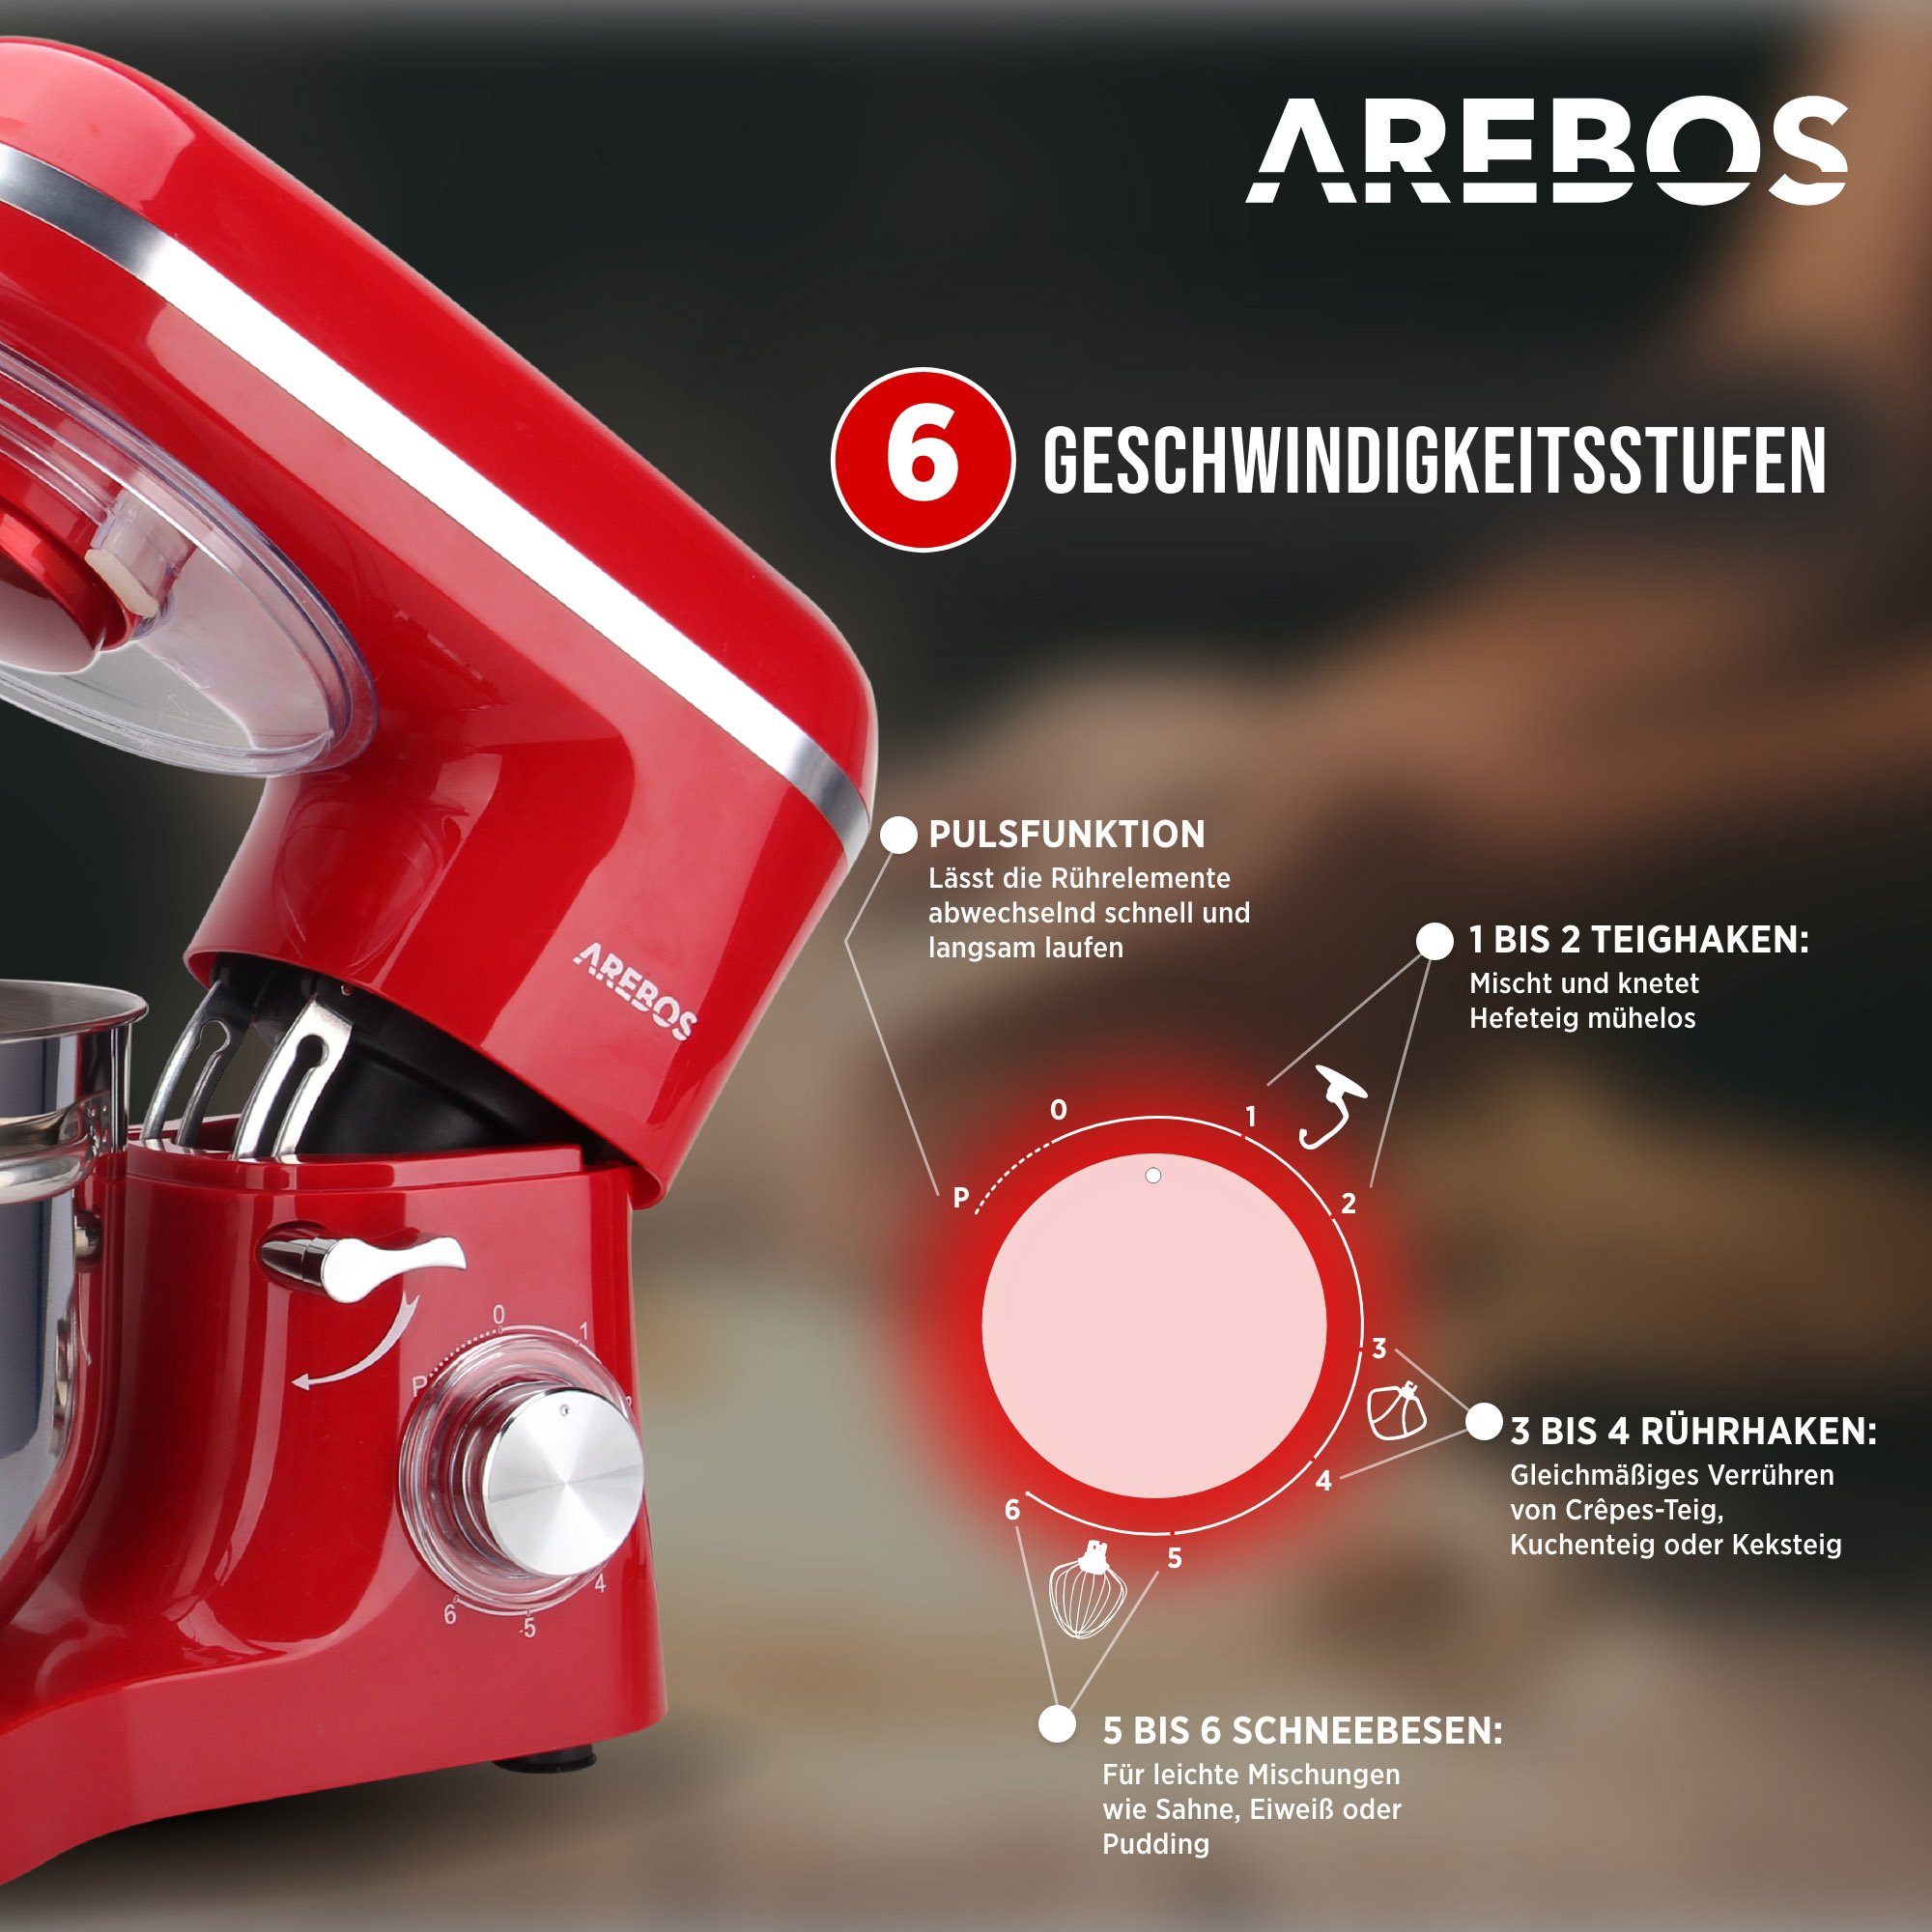 AREBOS 6 Speedlevels Küchenmaschine Rot Watt) (Rührschüsselkapazität: Liter, 6 1500